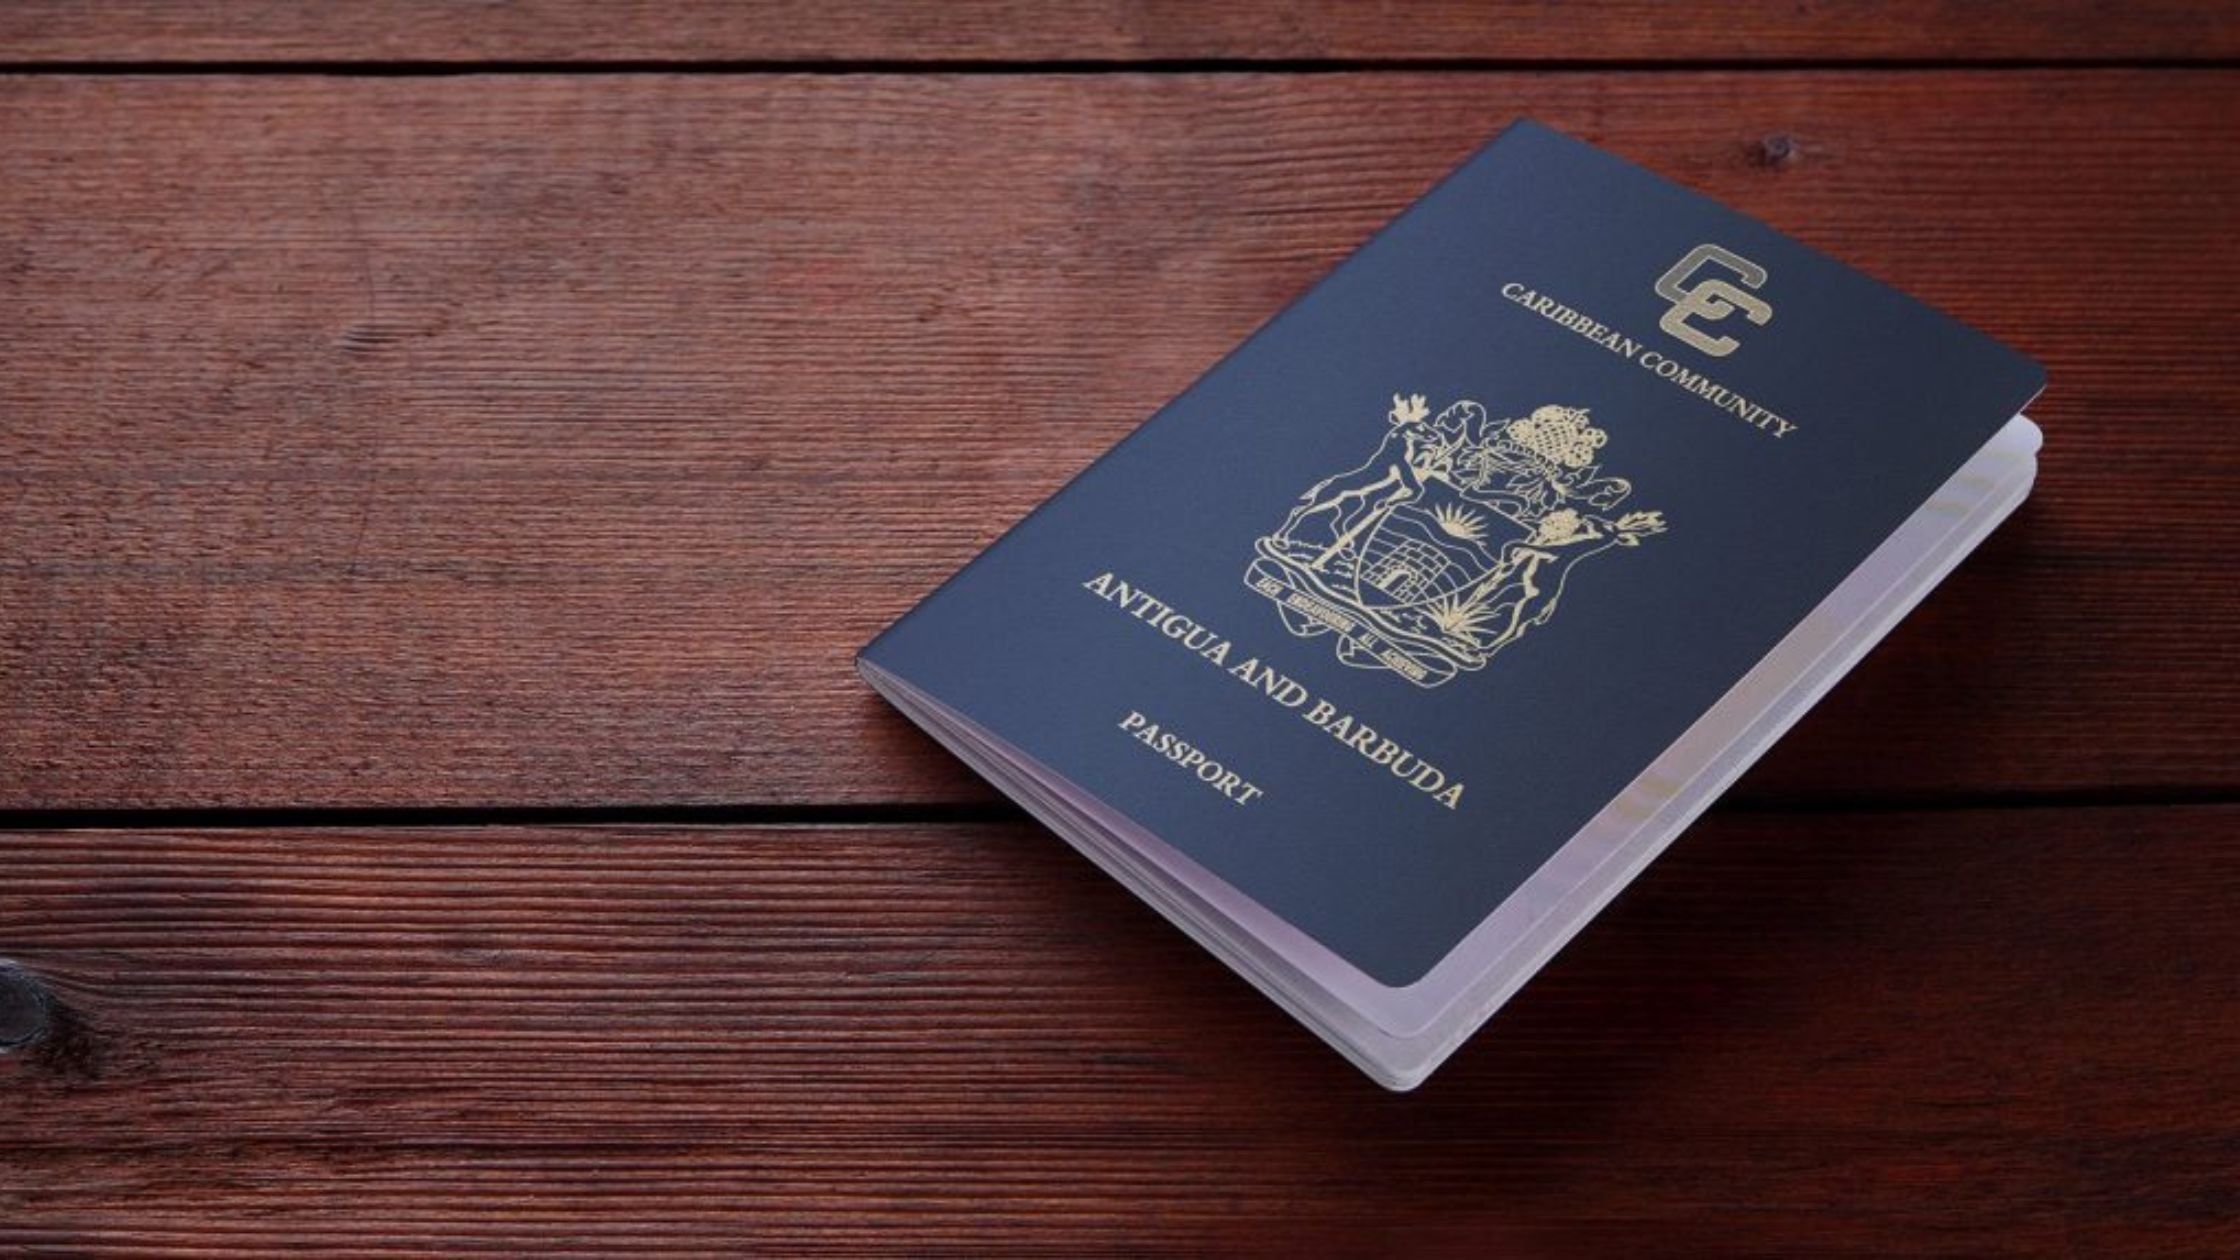 Antigua and Barbuda passport